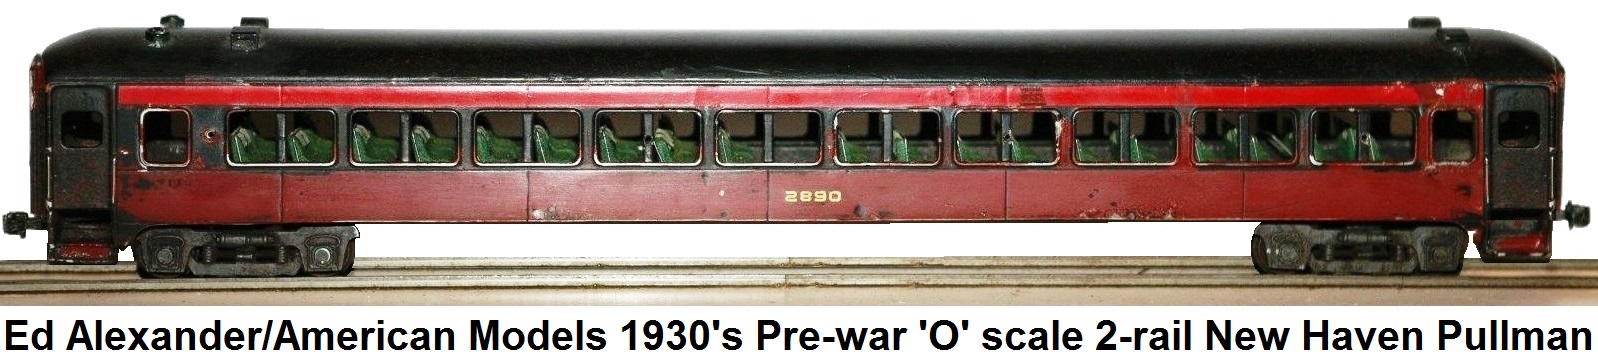 Ed Alexander/American Model Railways Pre-war 'O' scale 2-rail New Haven Pullman circa 1930's